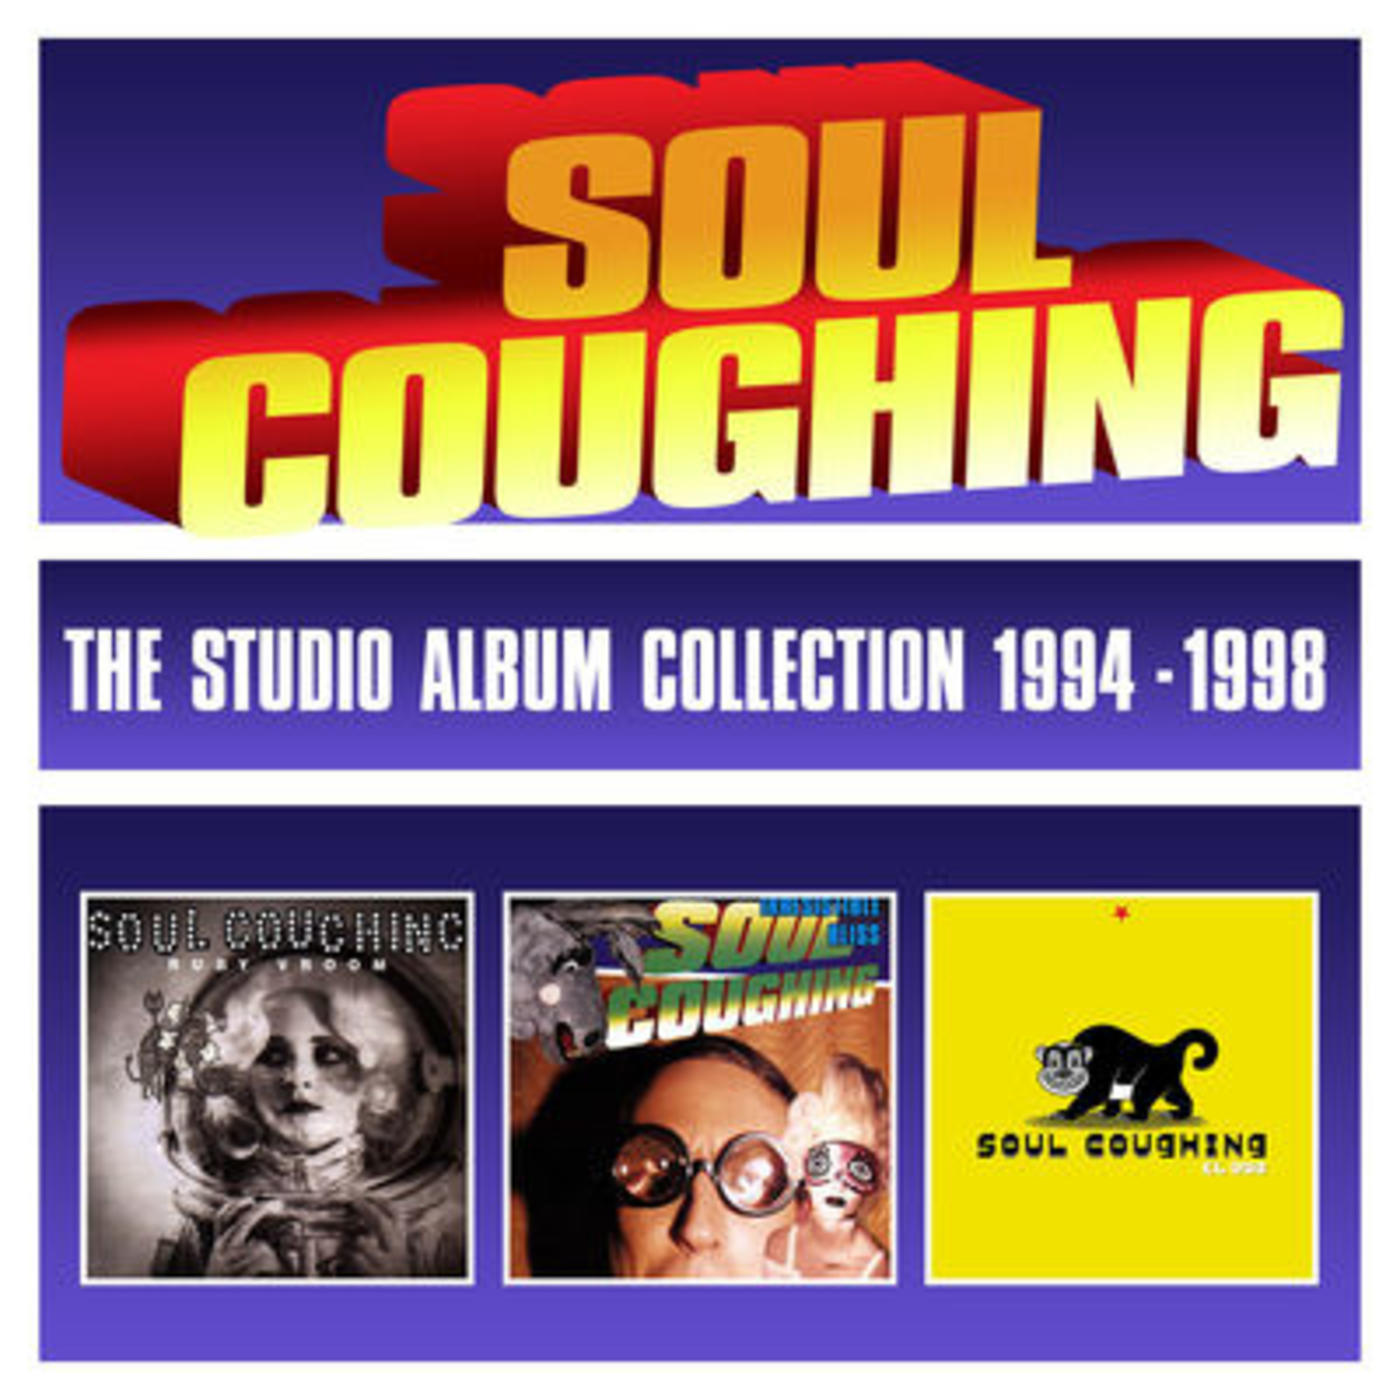 The Studio Album Collection 1994-1998